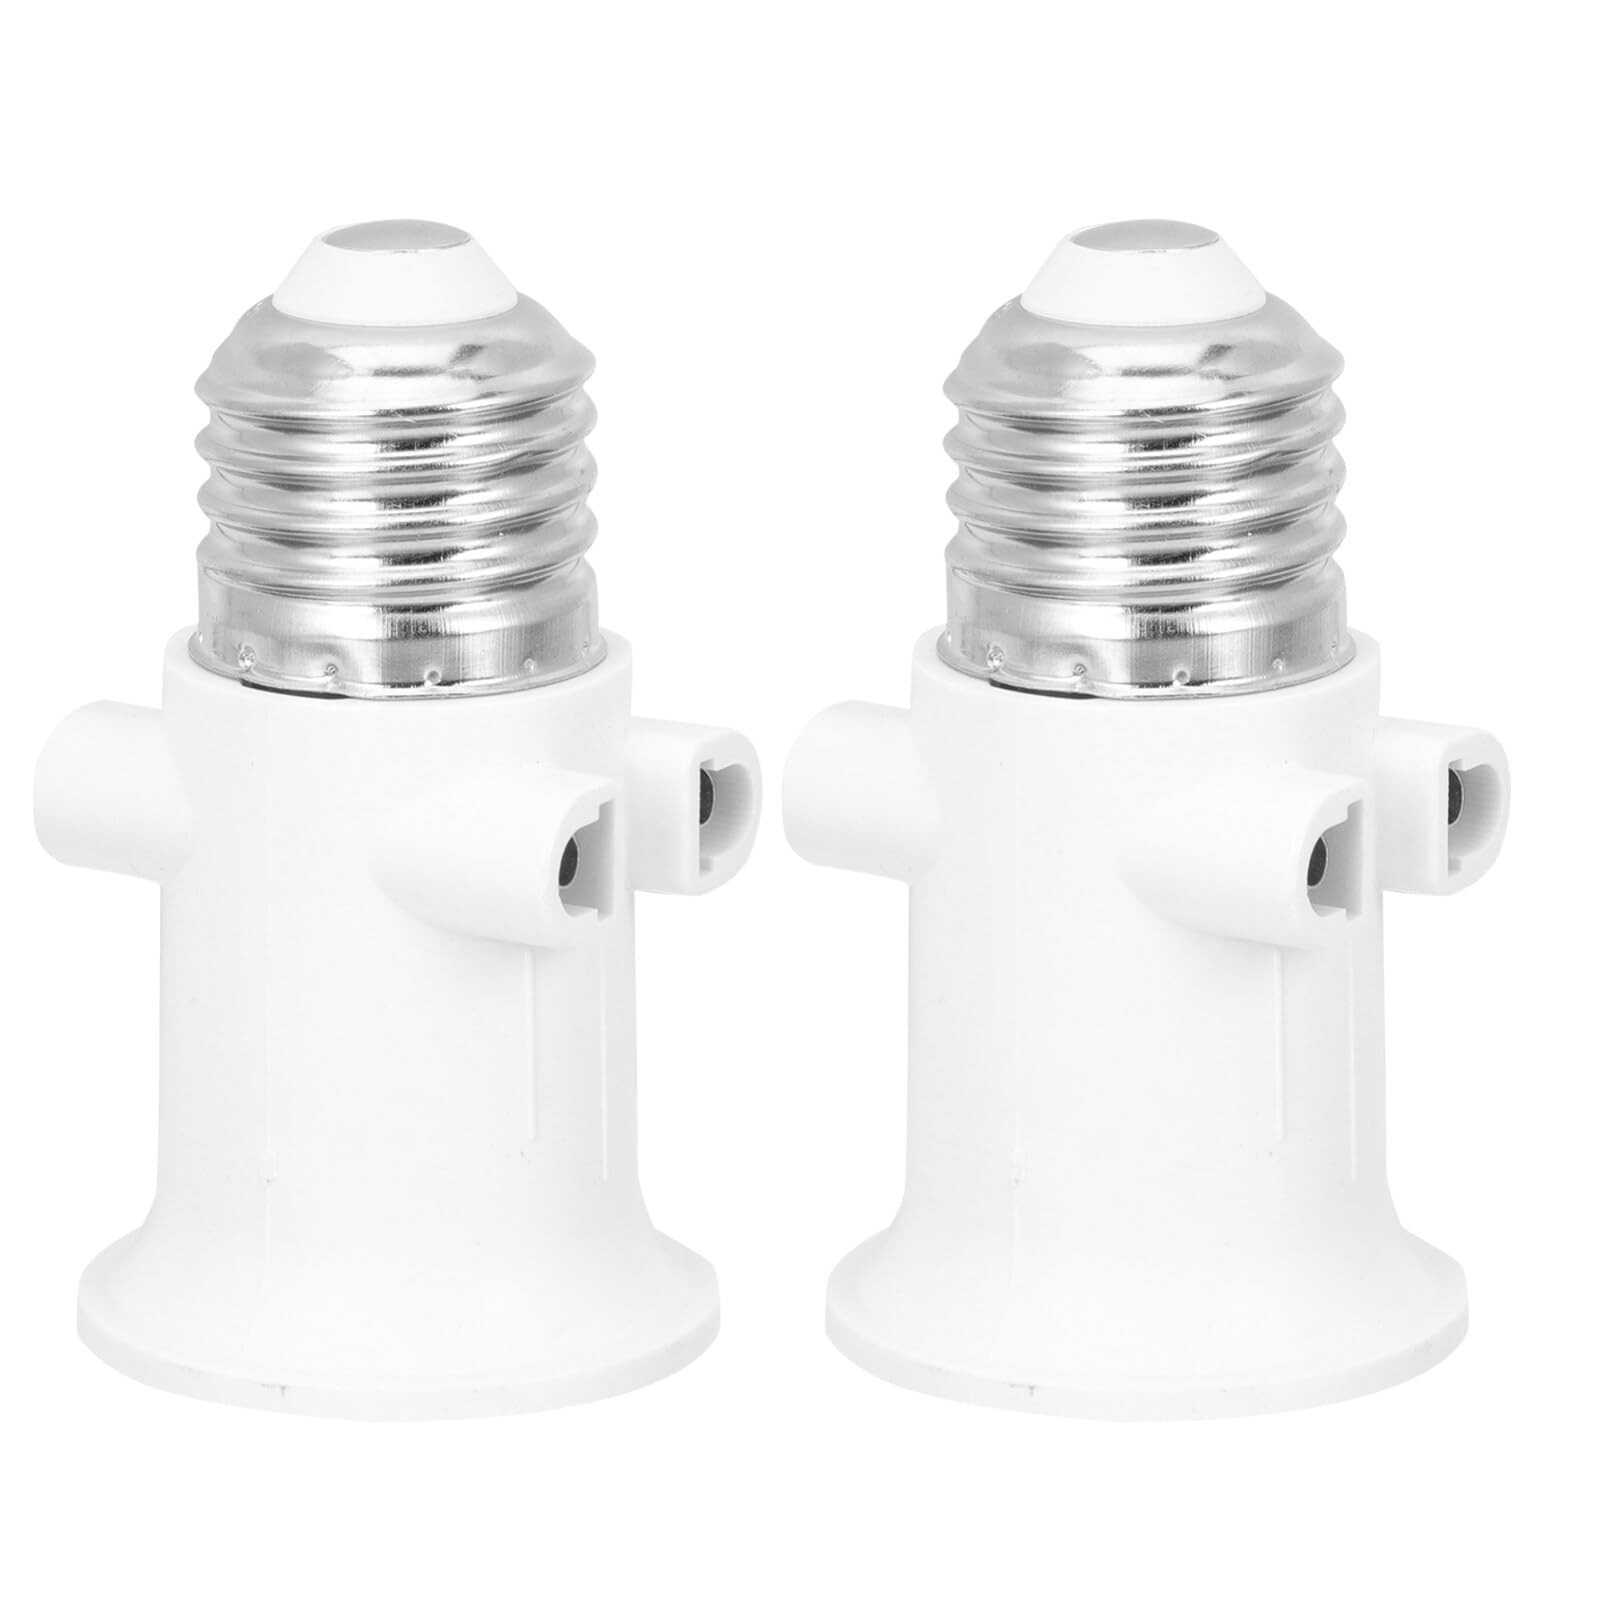 Uonlytech 2pcs Light Socket to Plug Adapter Outlet Plug Splitter Light Bulb Socket von Uonlytech